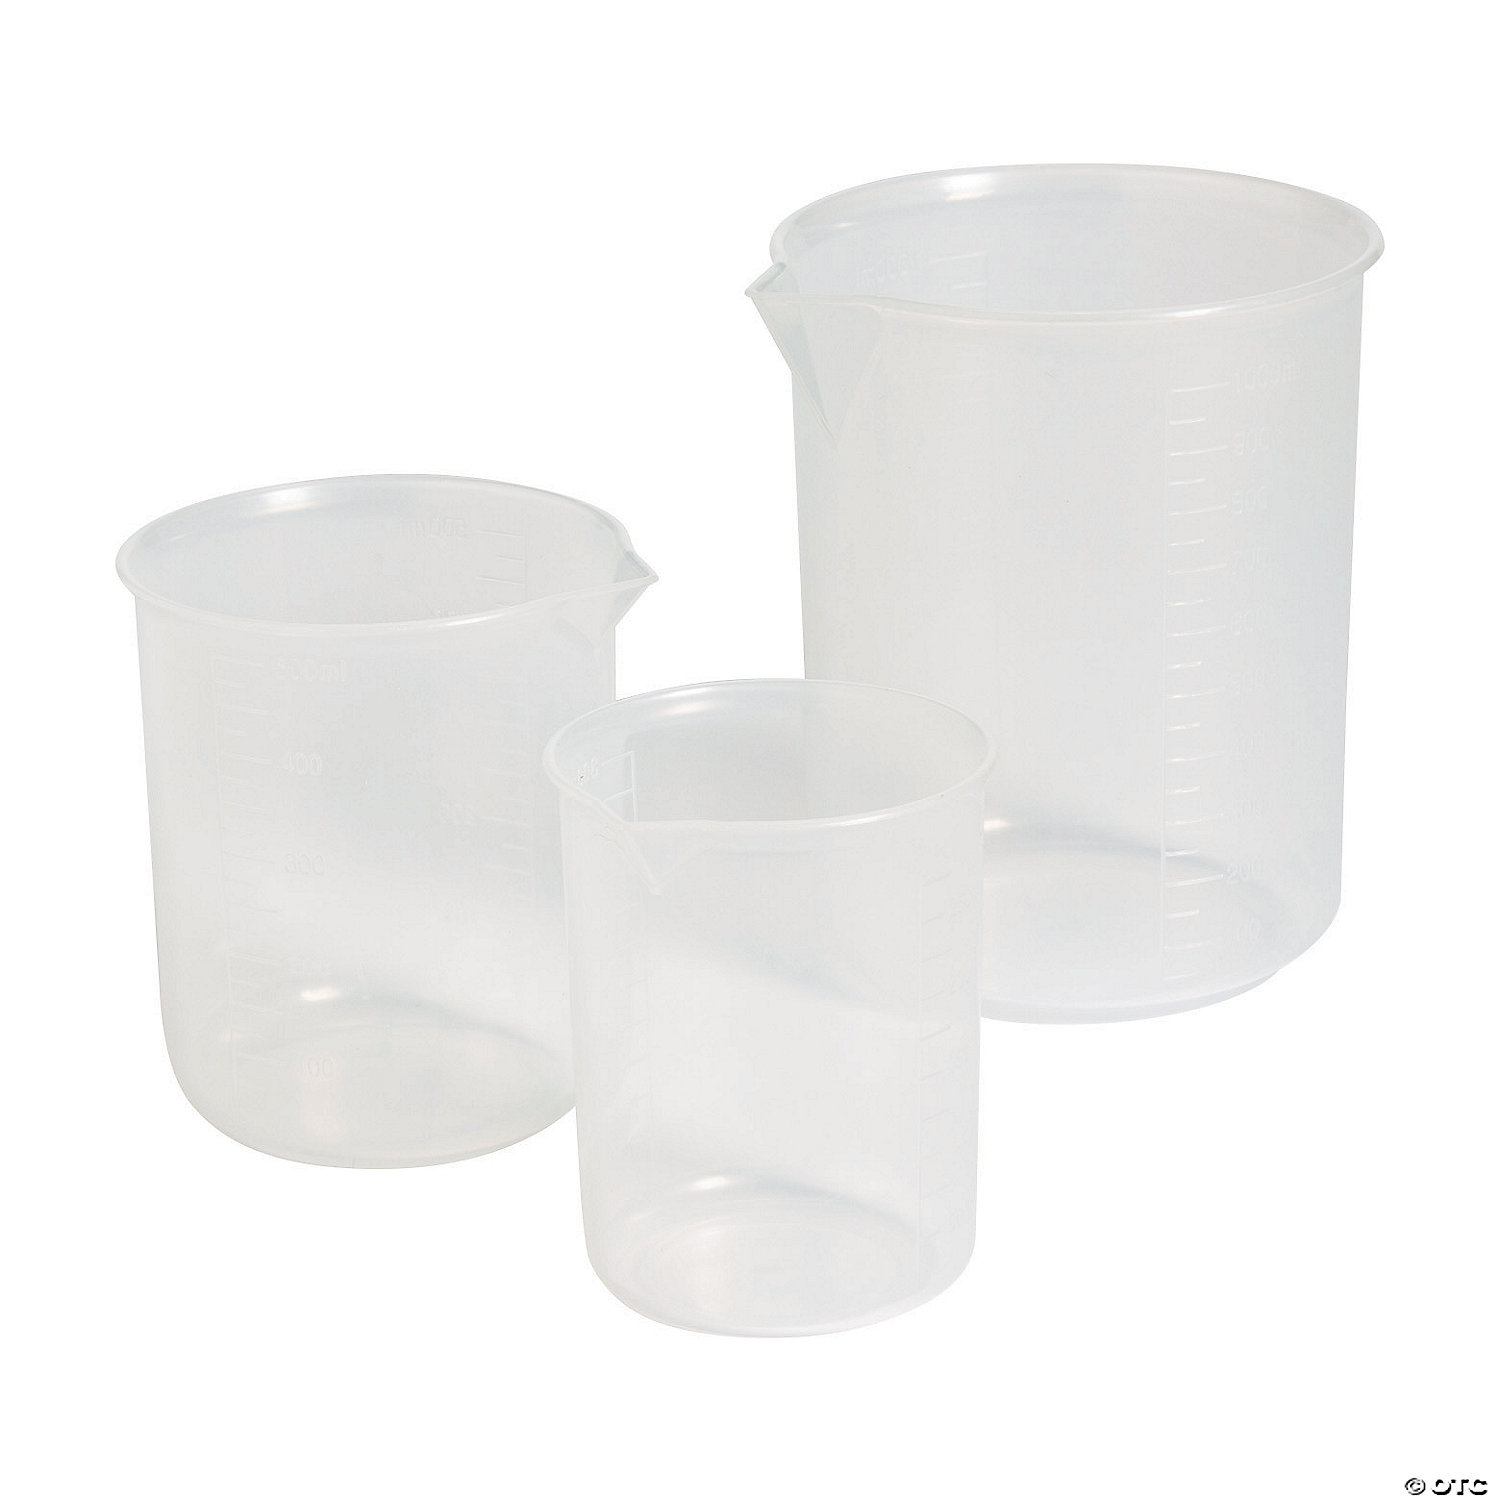 plastic beakers for parties